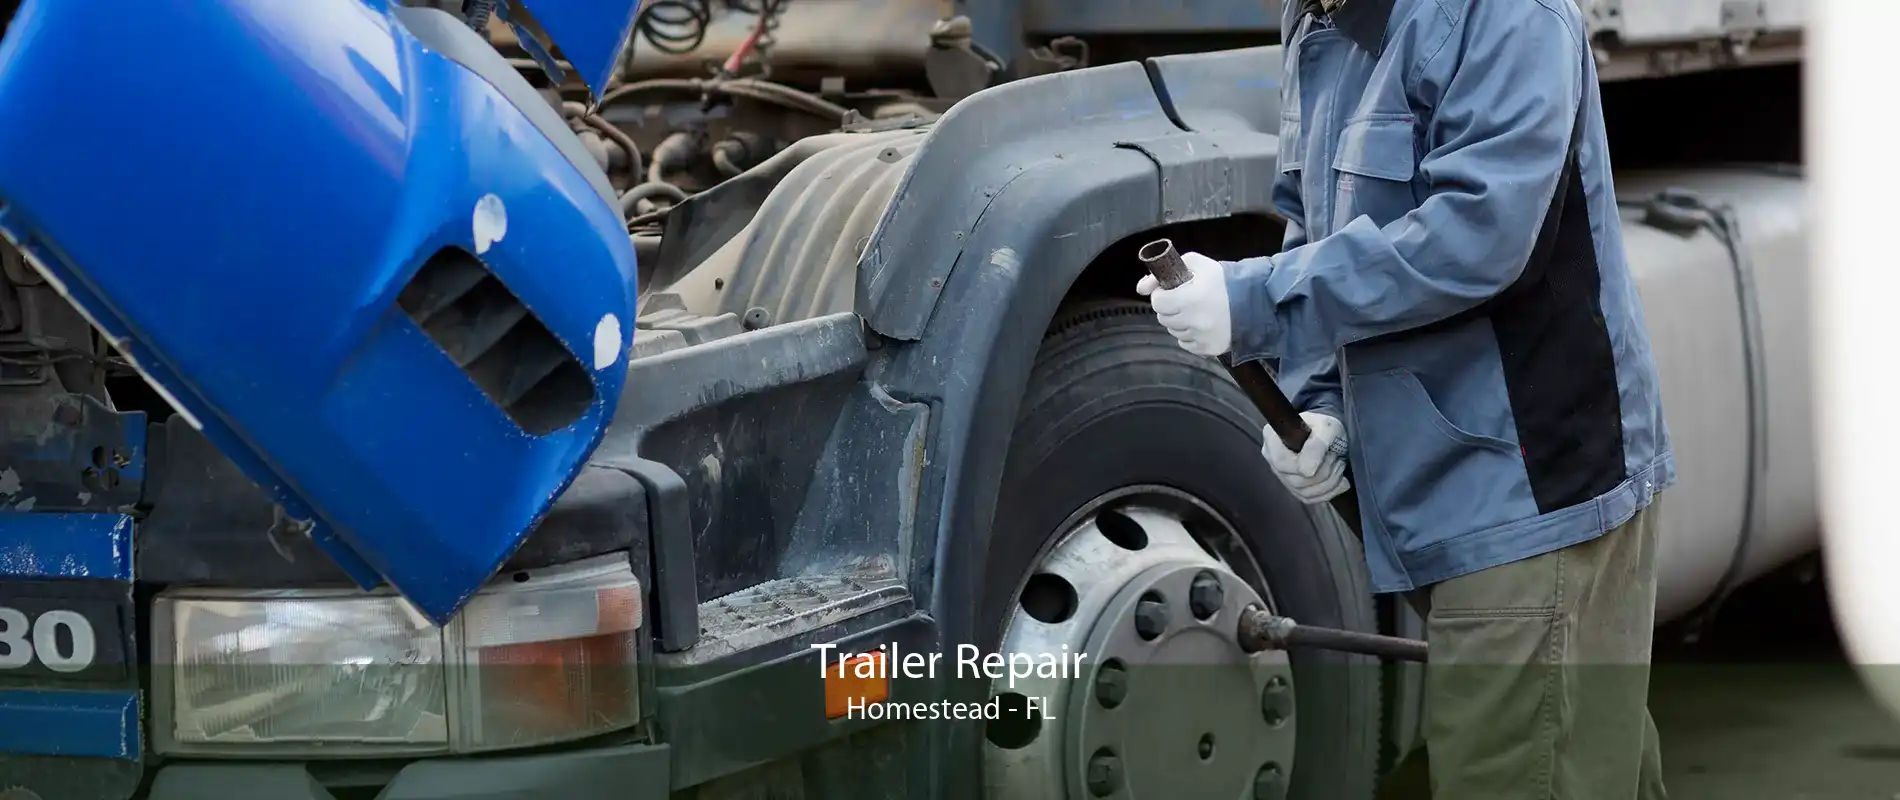 Trailer Repair Homestead - FL